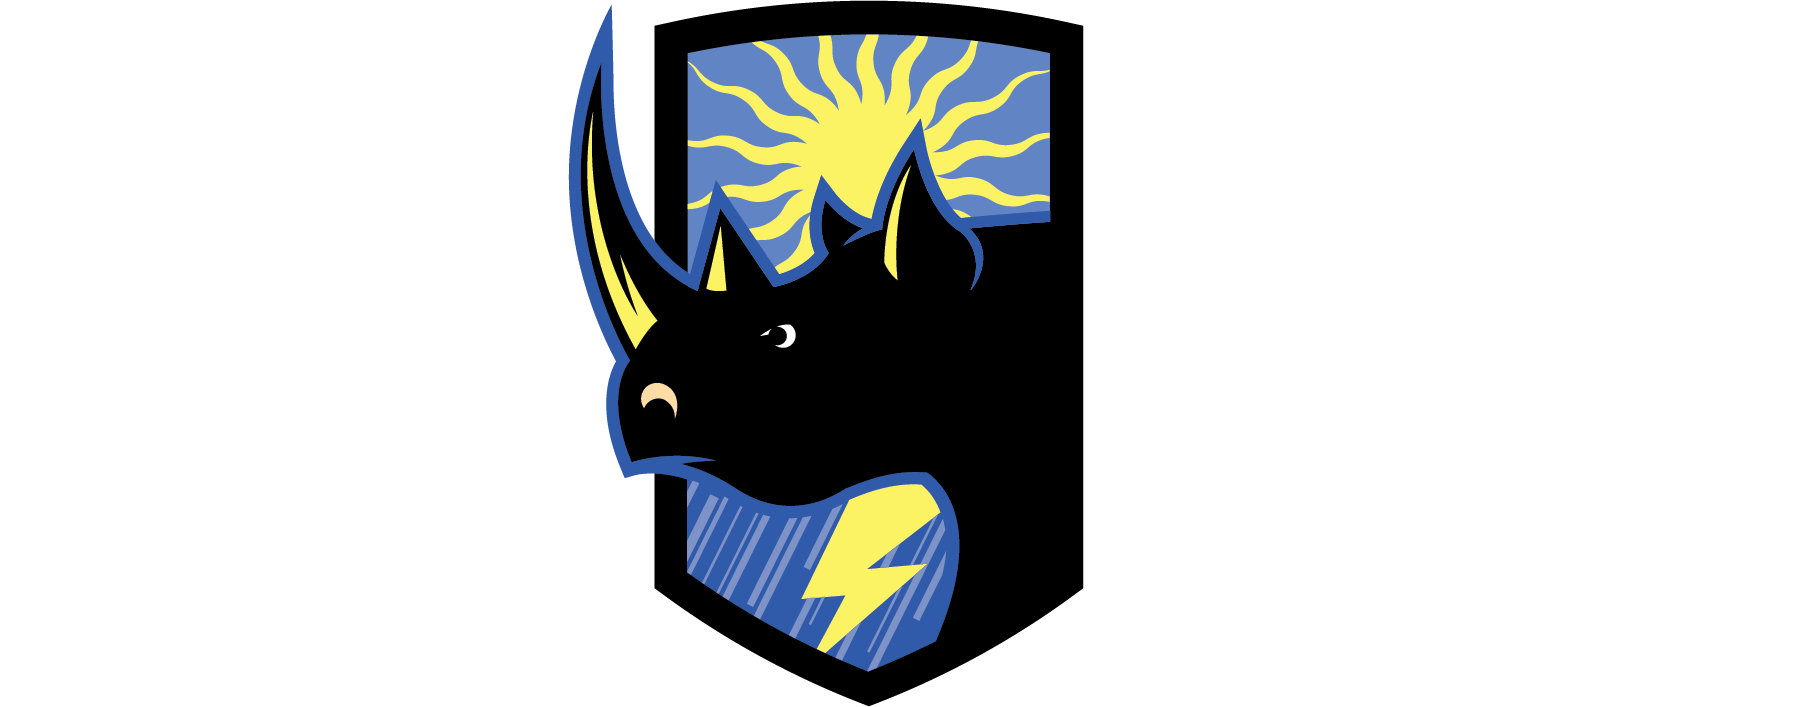 rhino shield logo